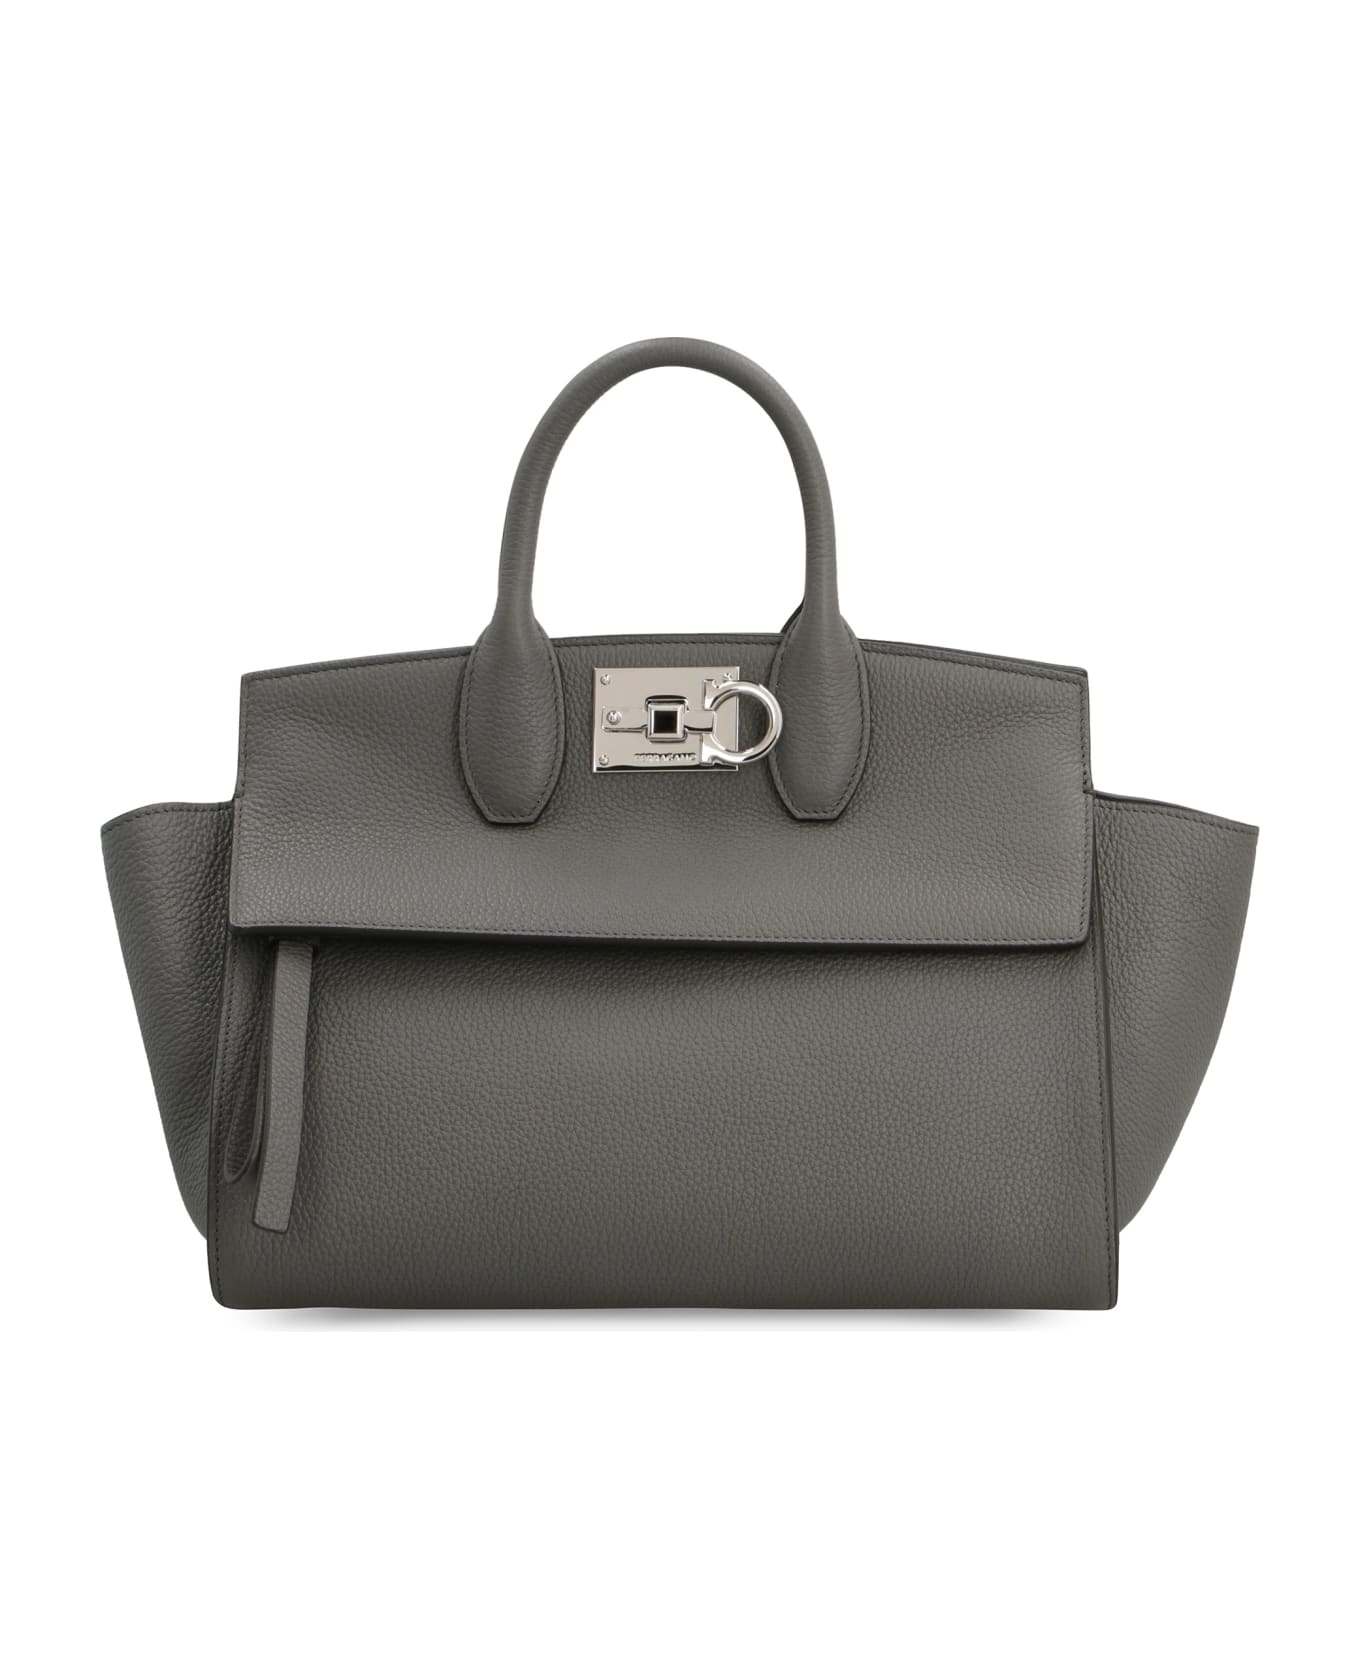 Ferragamo Studio Soft Leather Handbag - DARK GREY